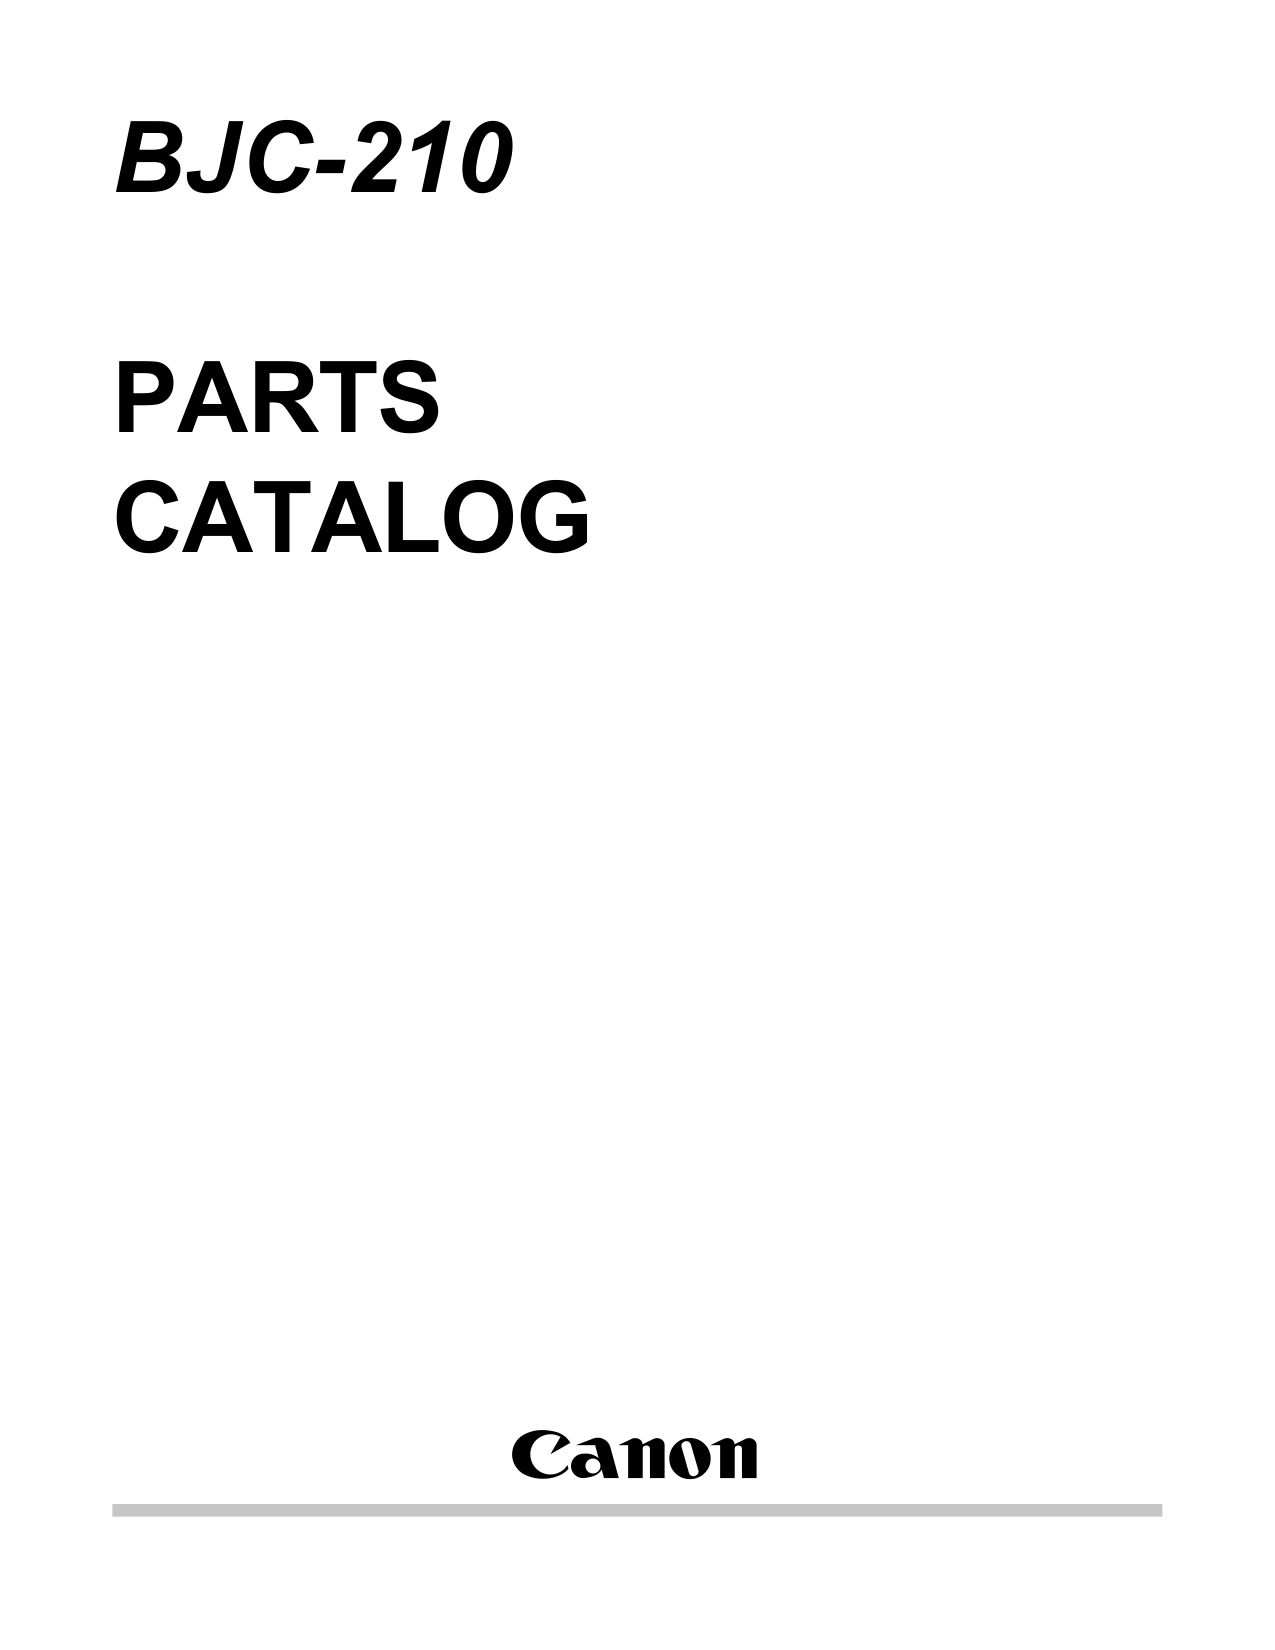 Canon BubbleJet BJC-210 Parts Catalog Manual-1